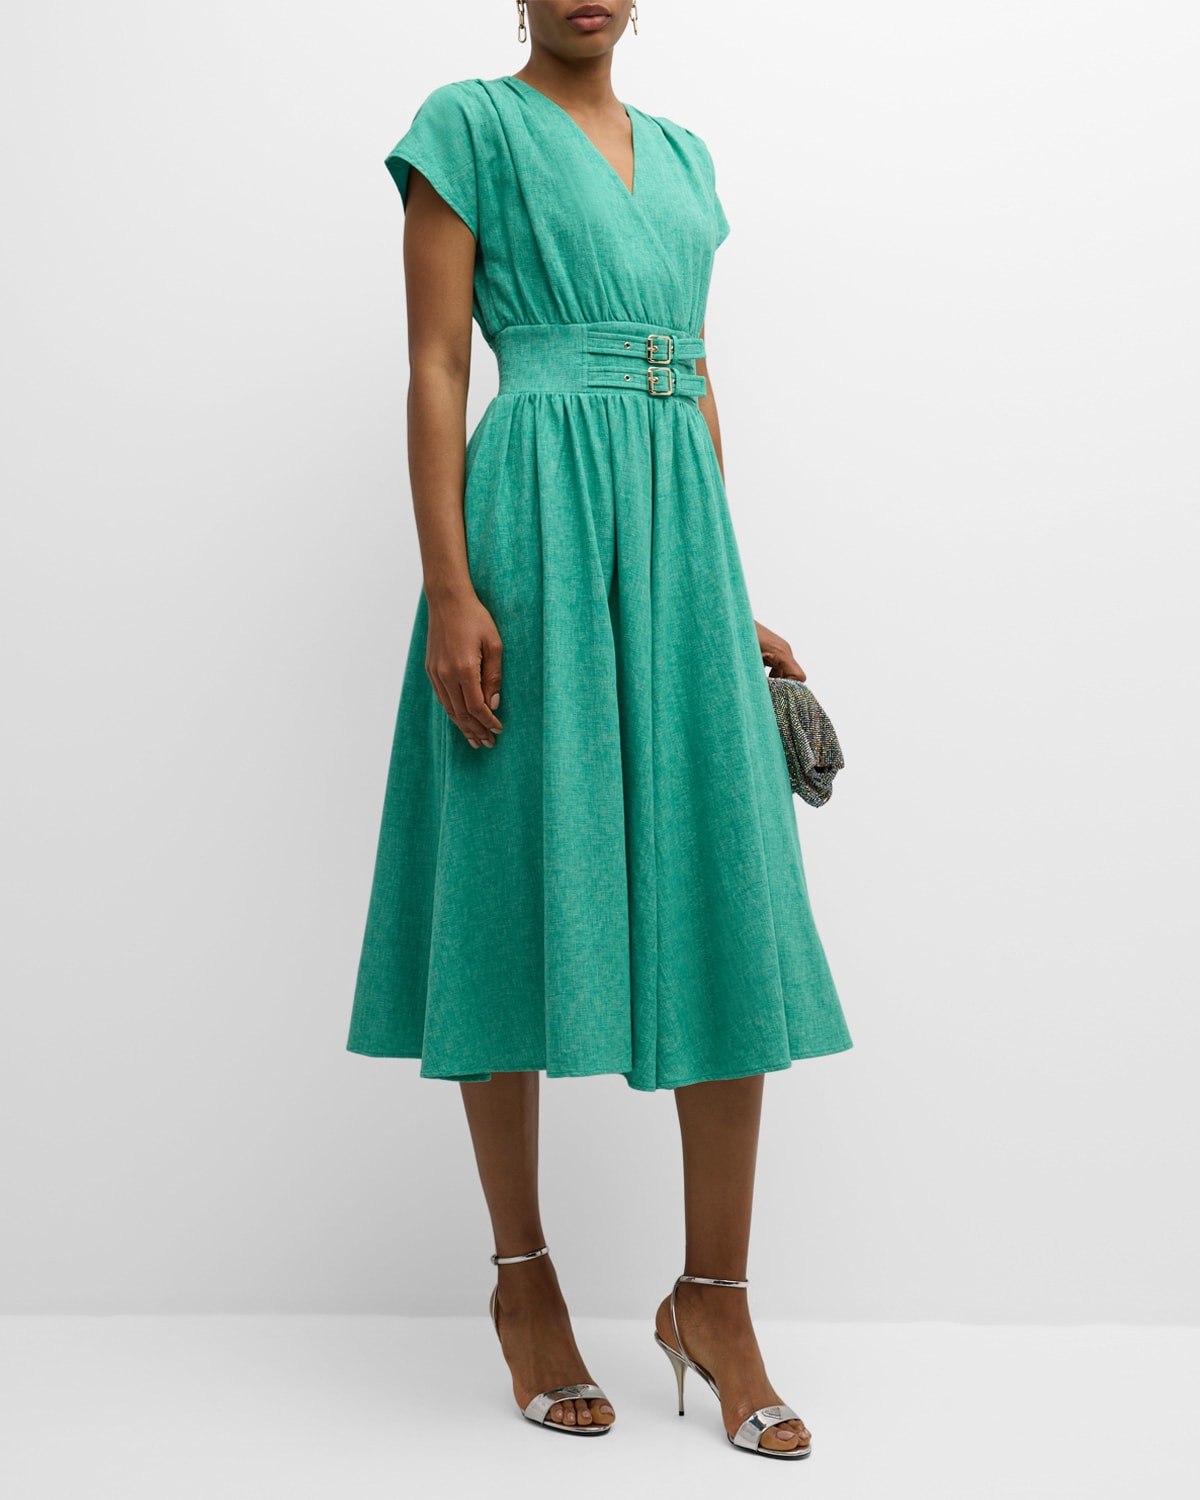 The Romina Buckle-Embellished A-Line Midi Dress